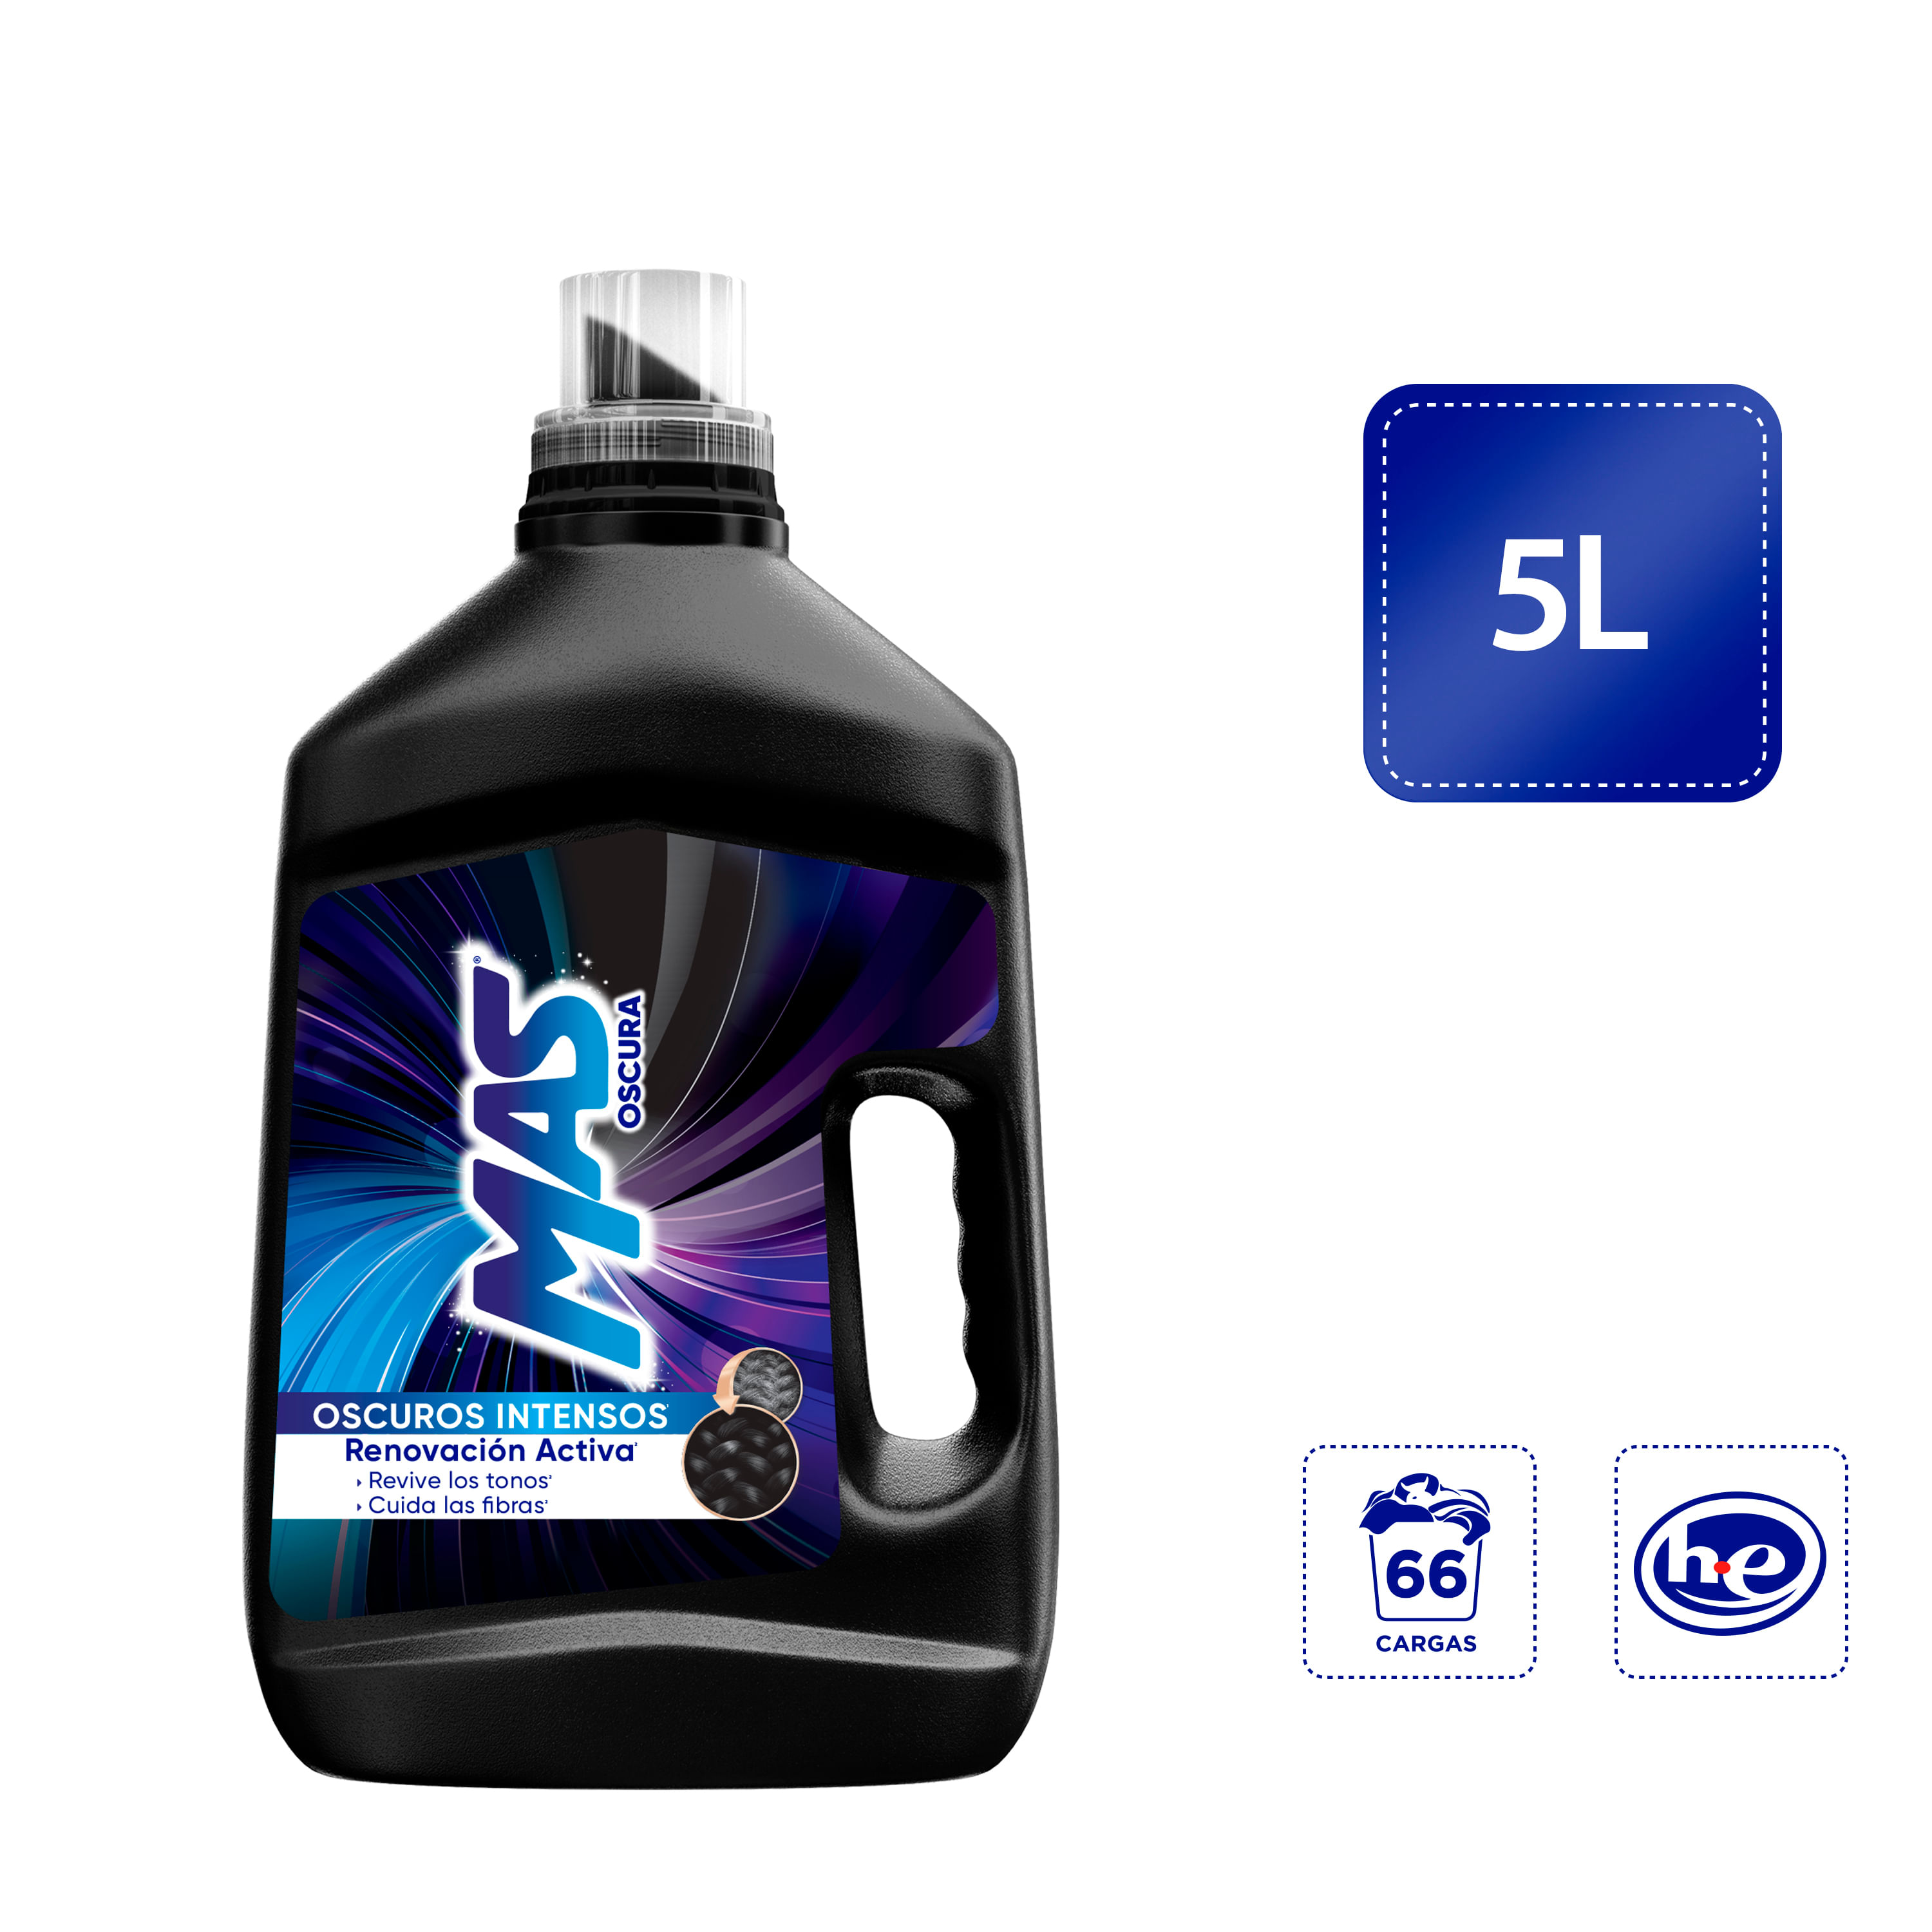 Comprar Detergente Líquido MAS Oscura - 5Lt | Walmart Guatemala